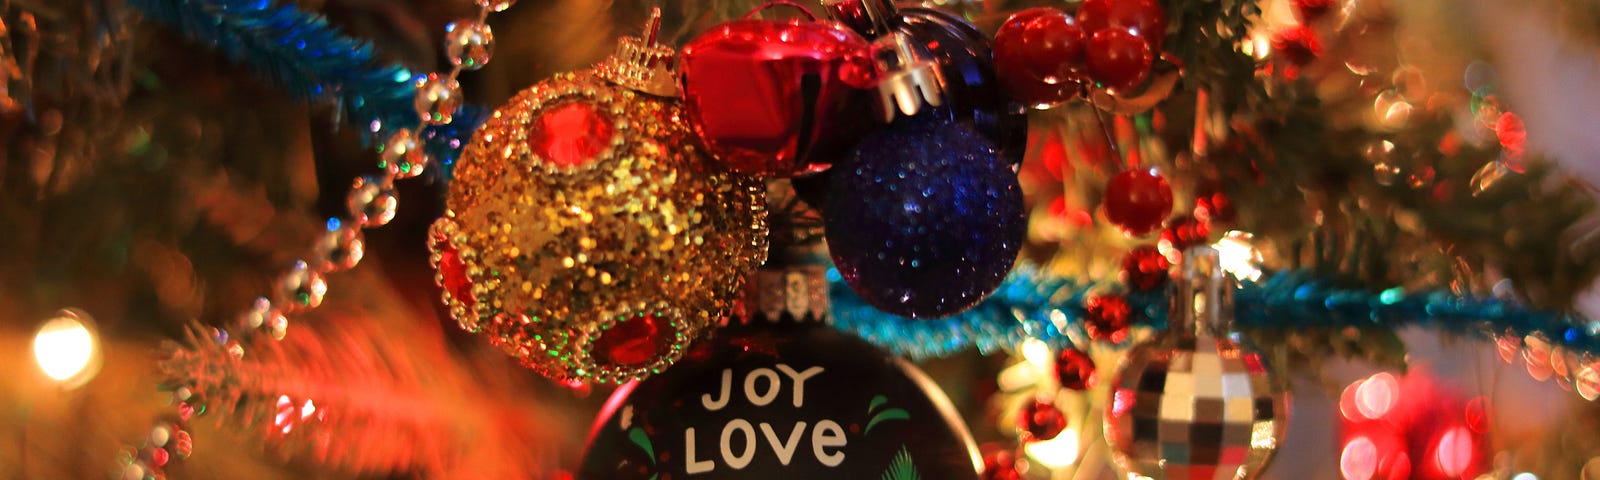 joy, love, peace, believe Christmas ornament on a brightly lit Christmas tree